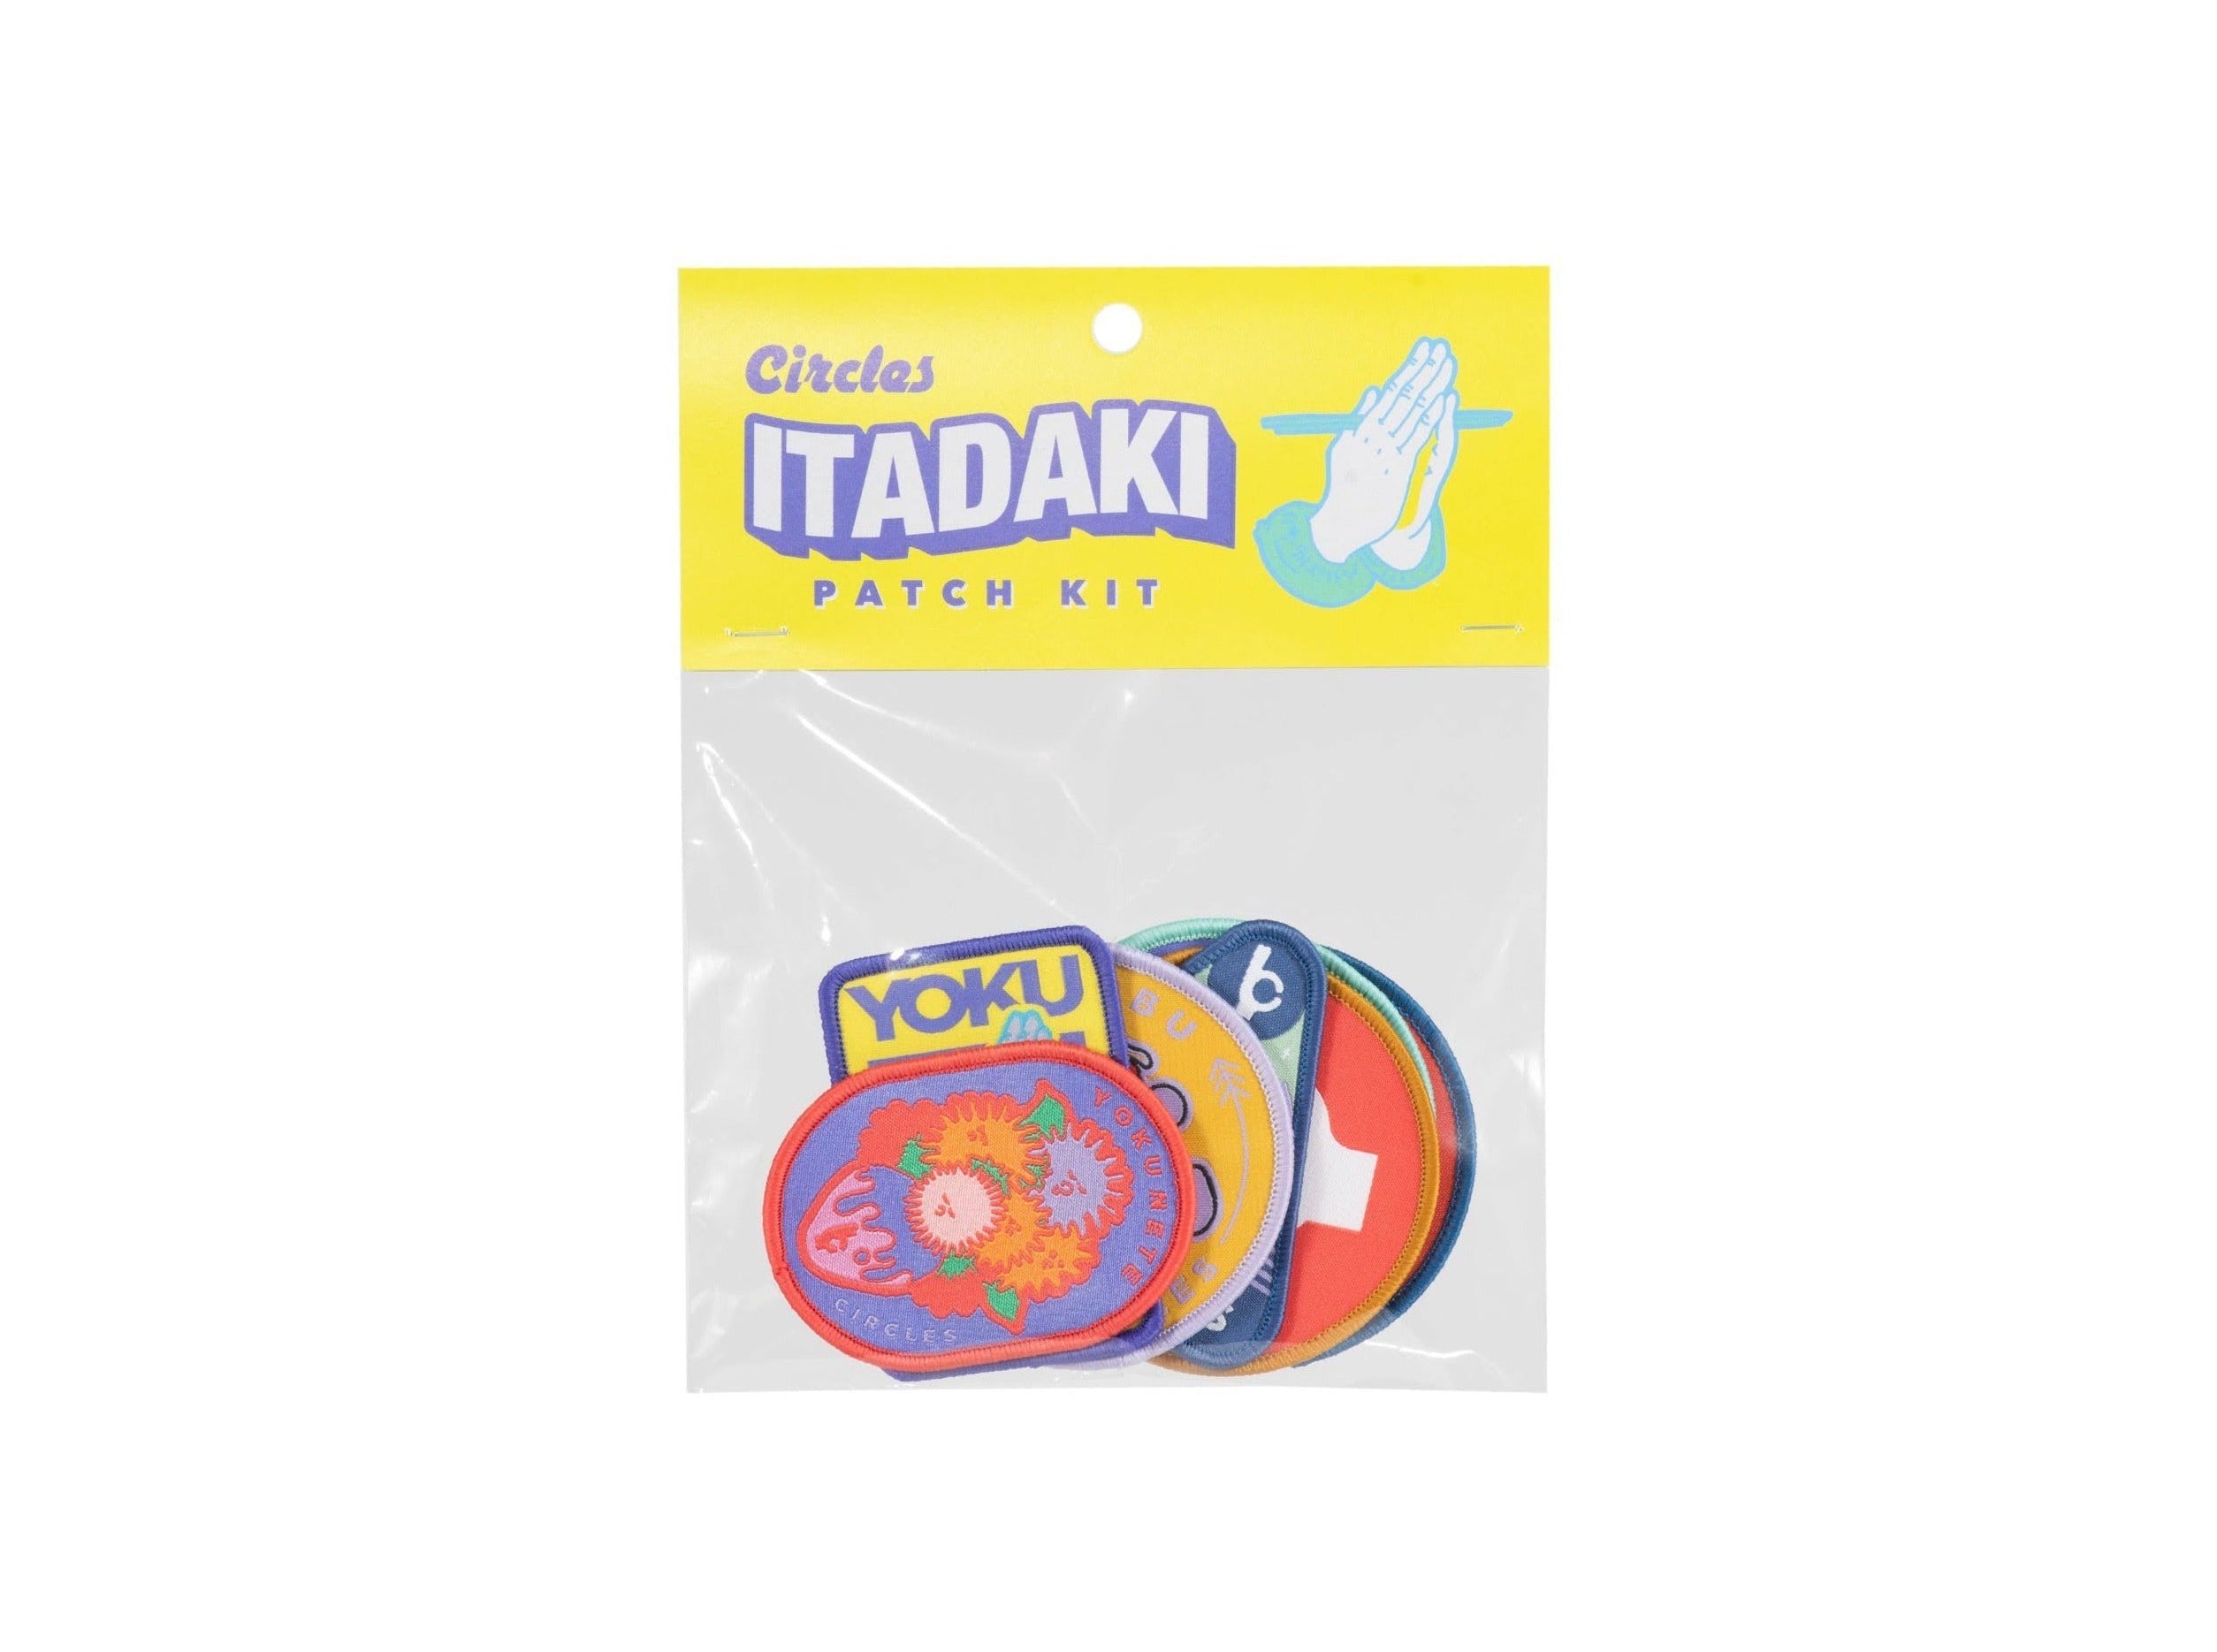 CIRCLES ORIGINAL Itadaki Patch Kit